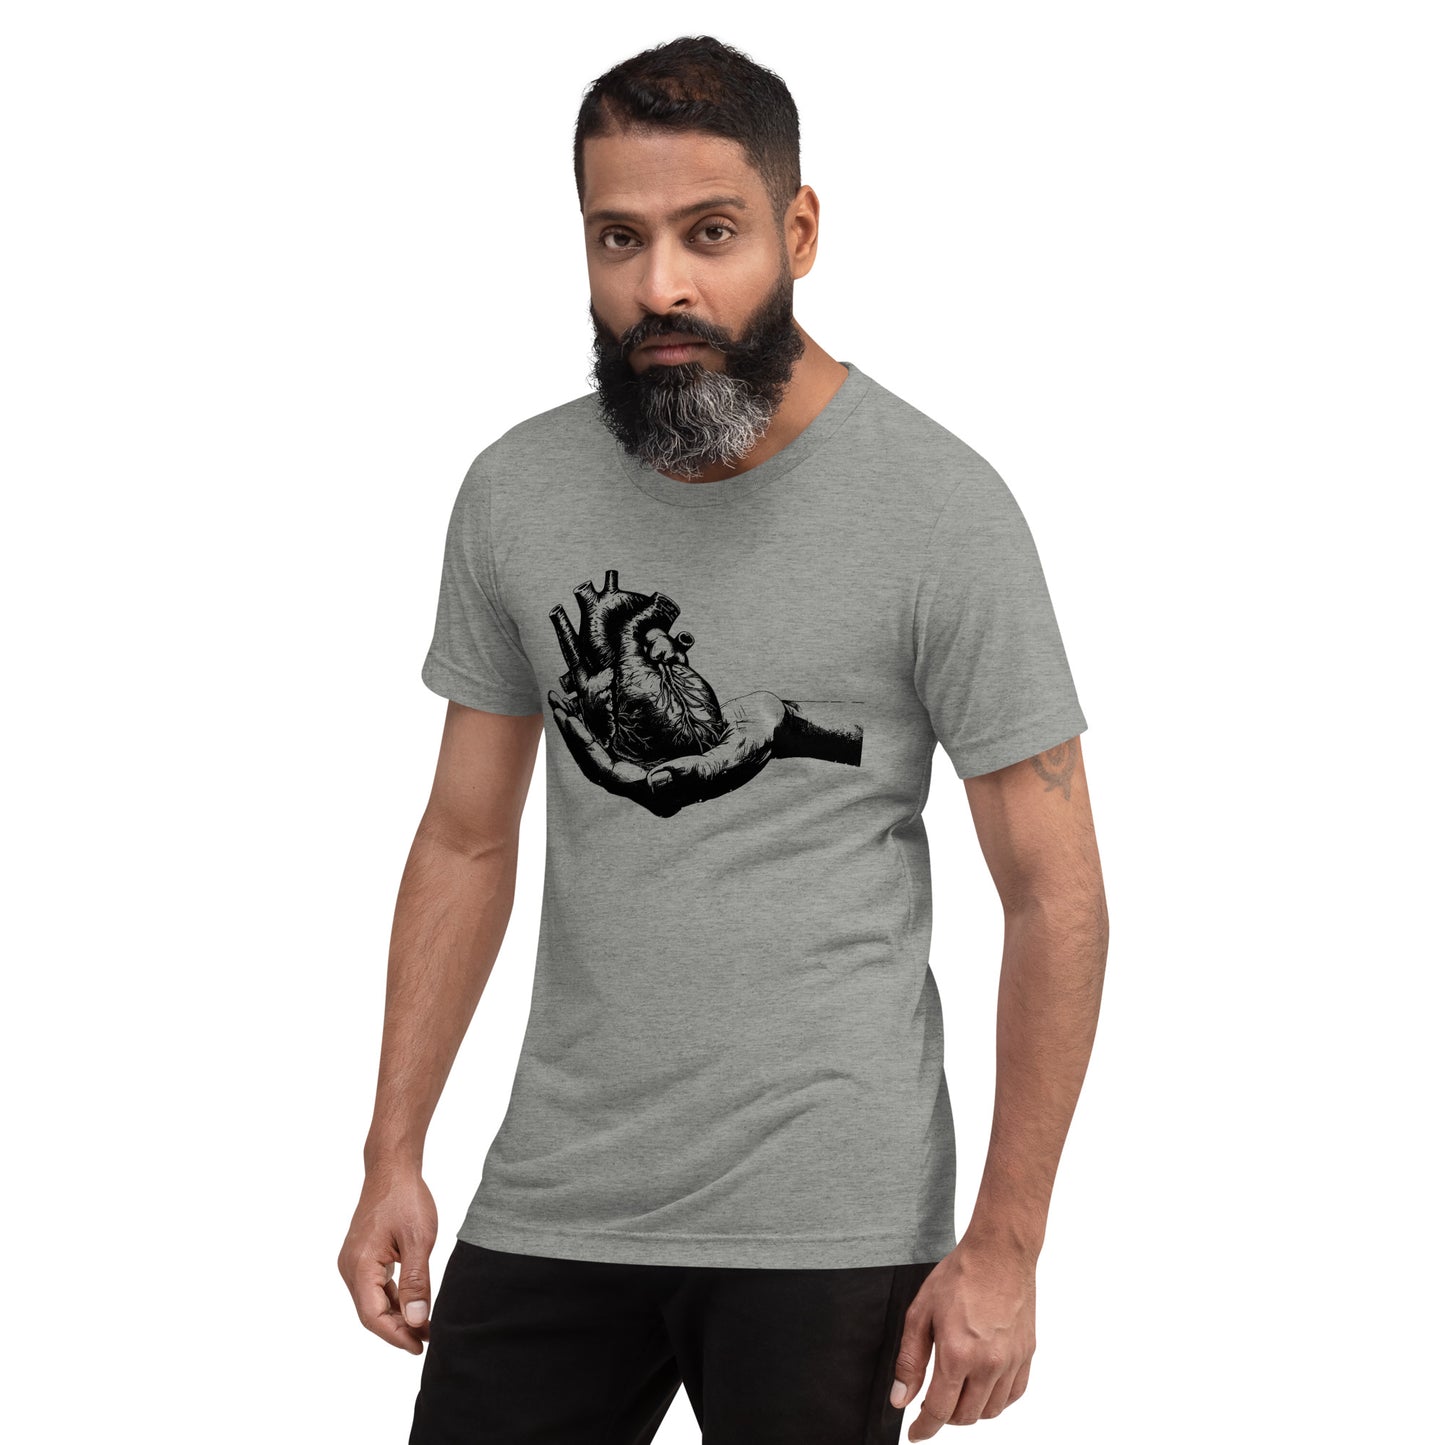 Blood Oath t-shirt: Dark Print on Light Shirt